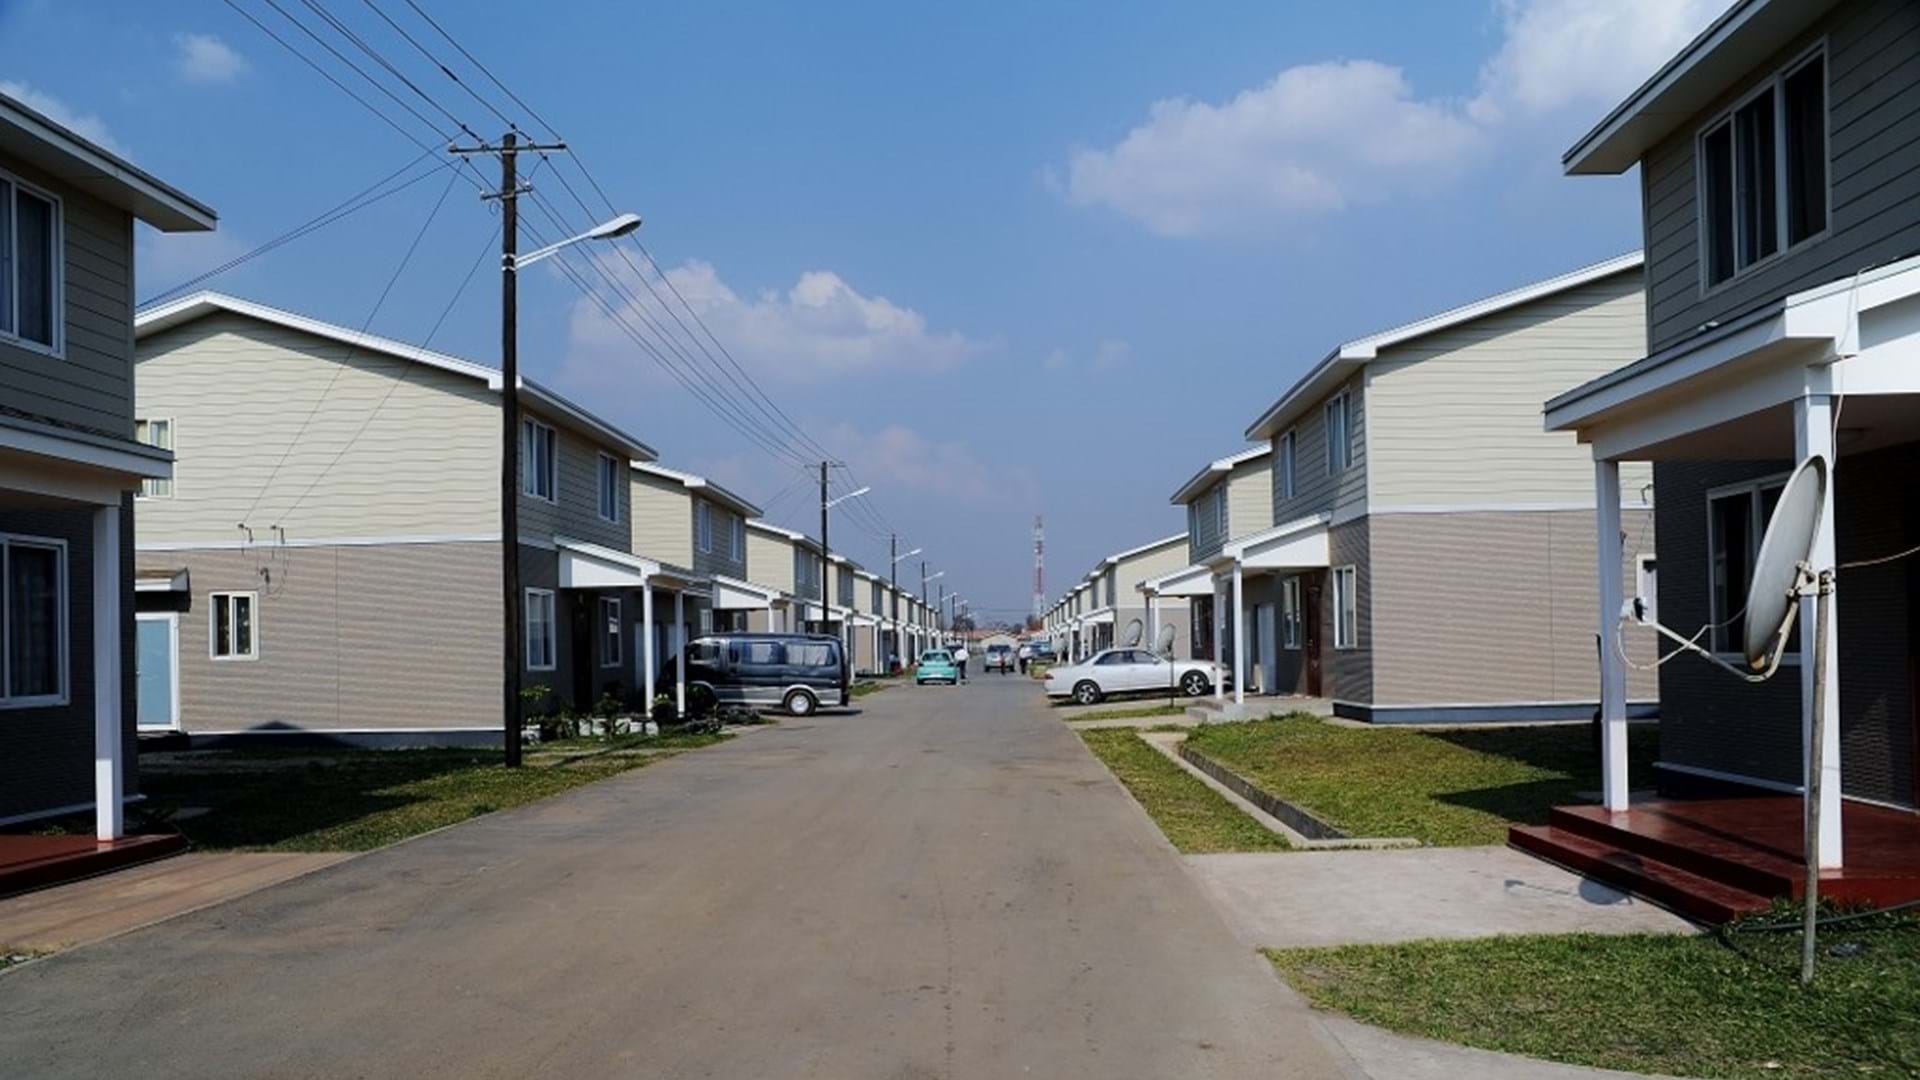 Zambia residential development project2